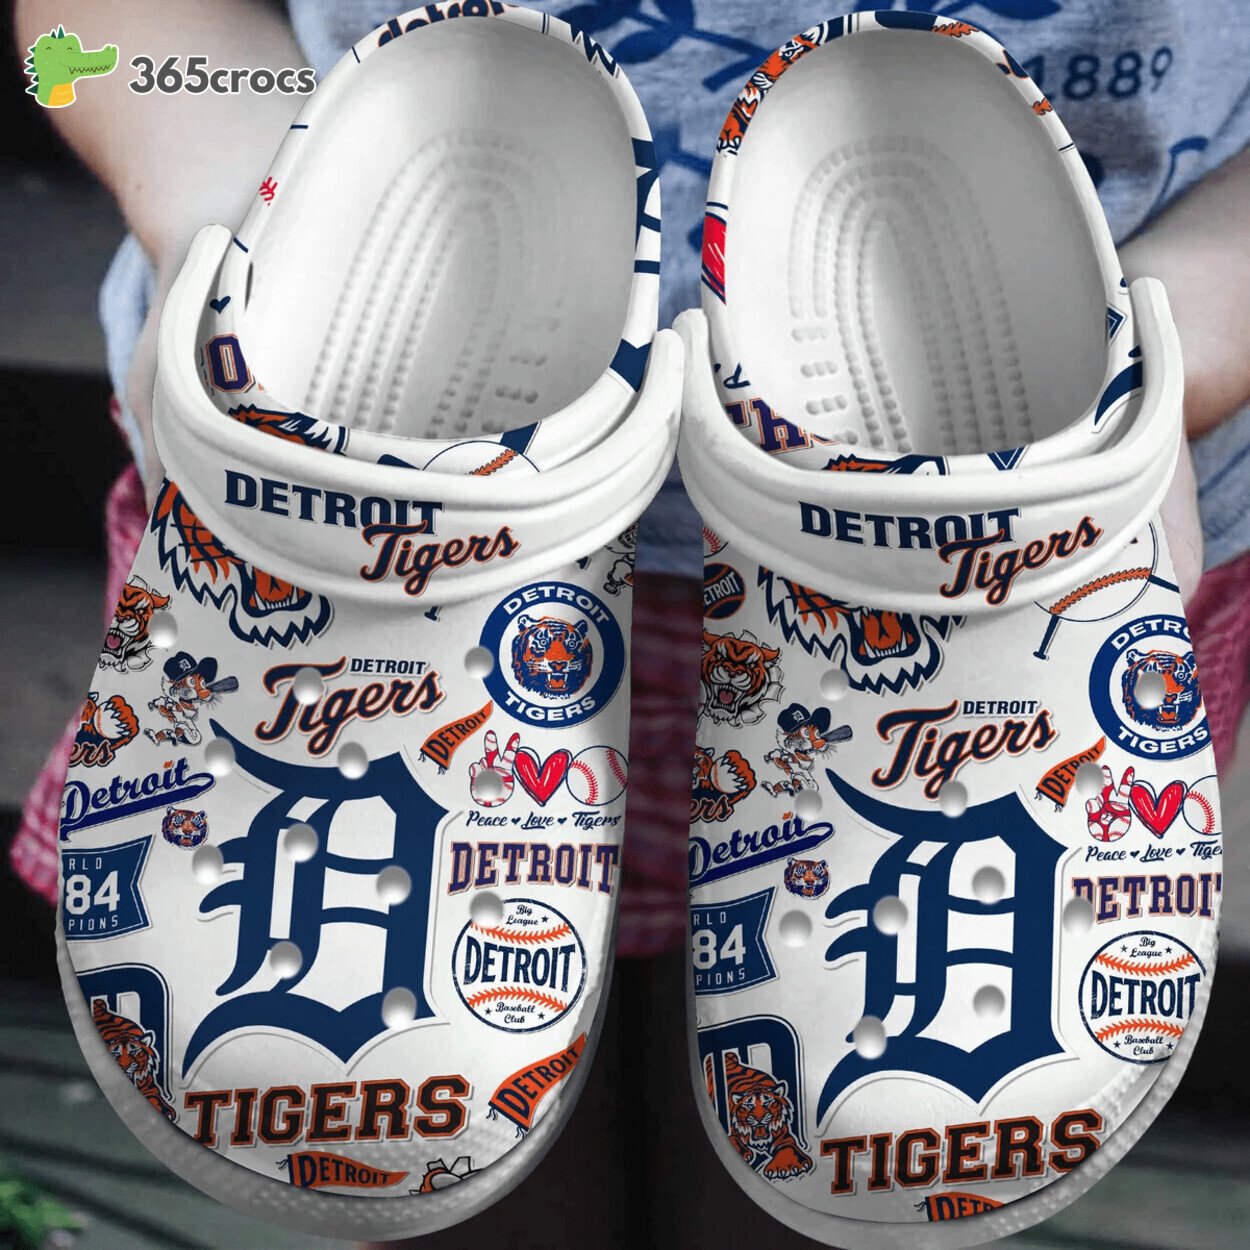 Detroit Tigers Baseball team MLB Sport Crocss Clogs Shoes Comfortable